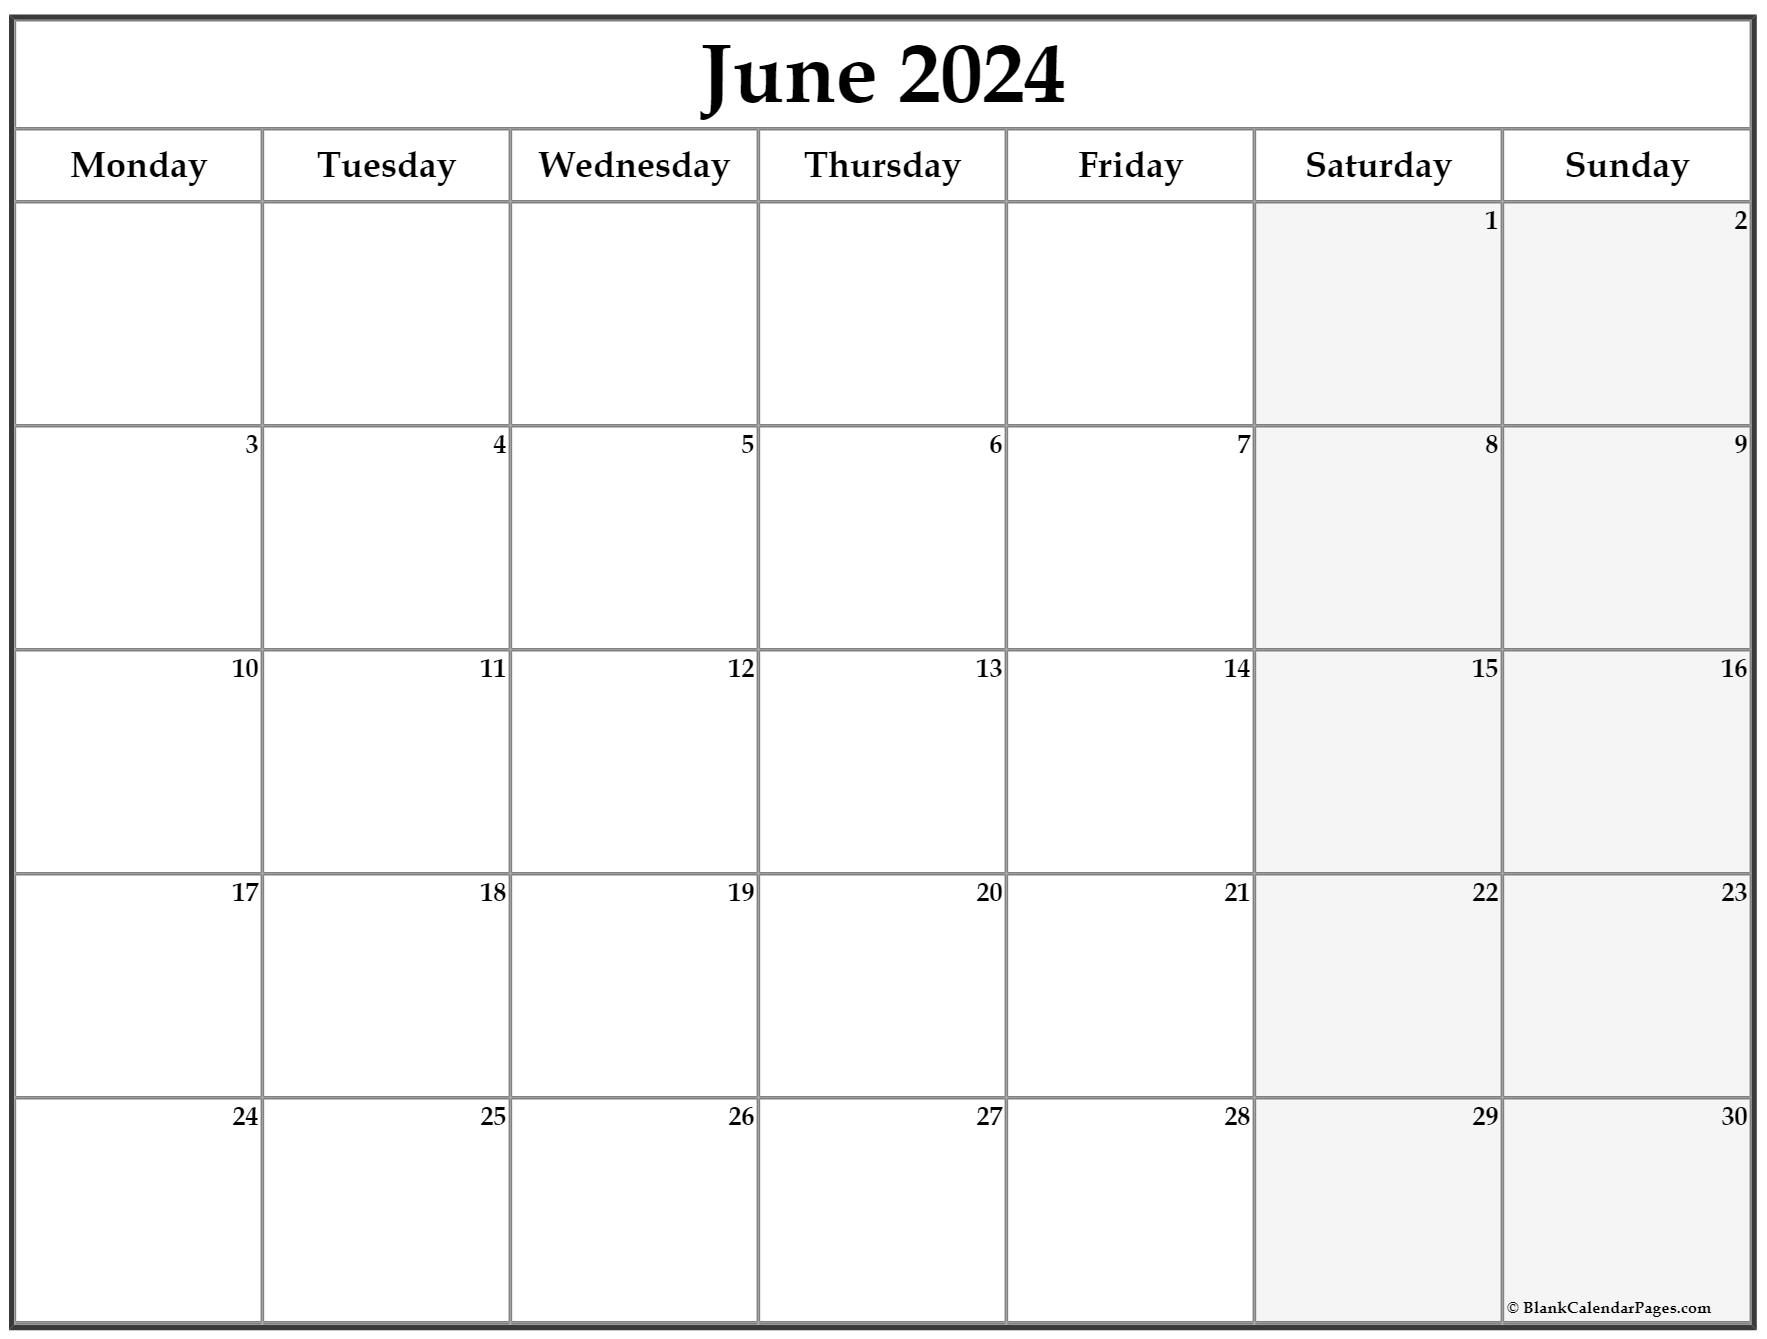 free 2023 printable calendar 2023 2023 year calendar with the week